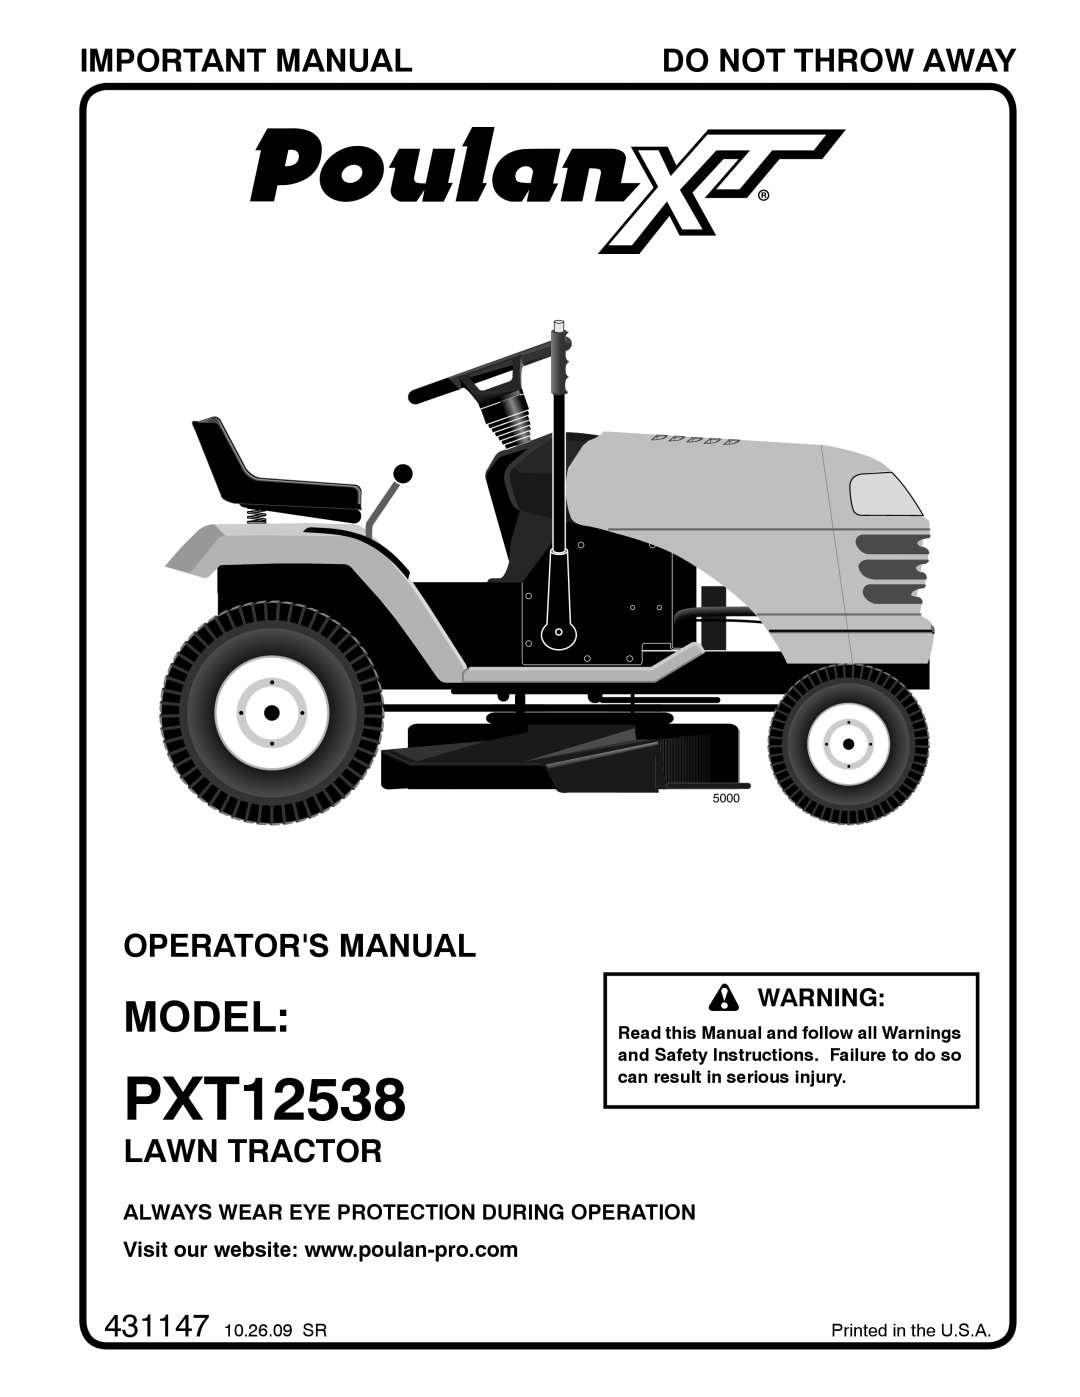 Poulan 96016002200 manual Important Manual, Do Not Throw Away, Operators Manual, Lawn Tractor, PXT12538, Model, 5000 